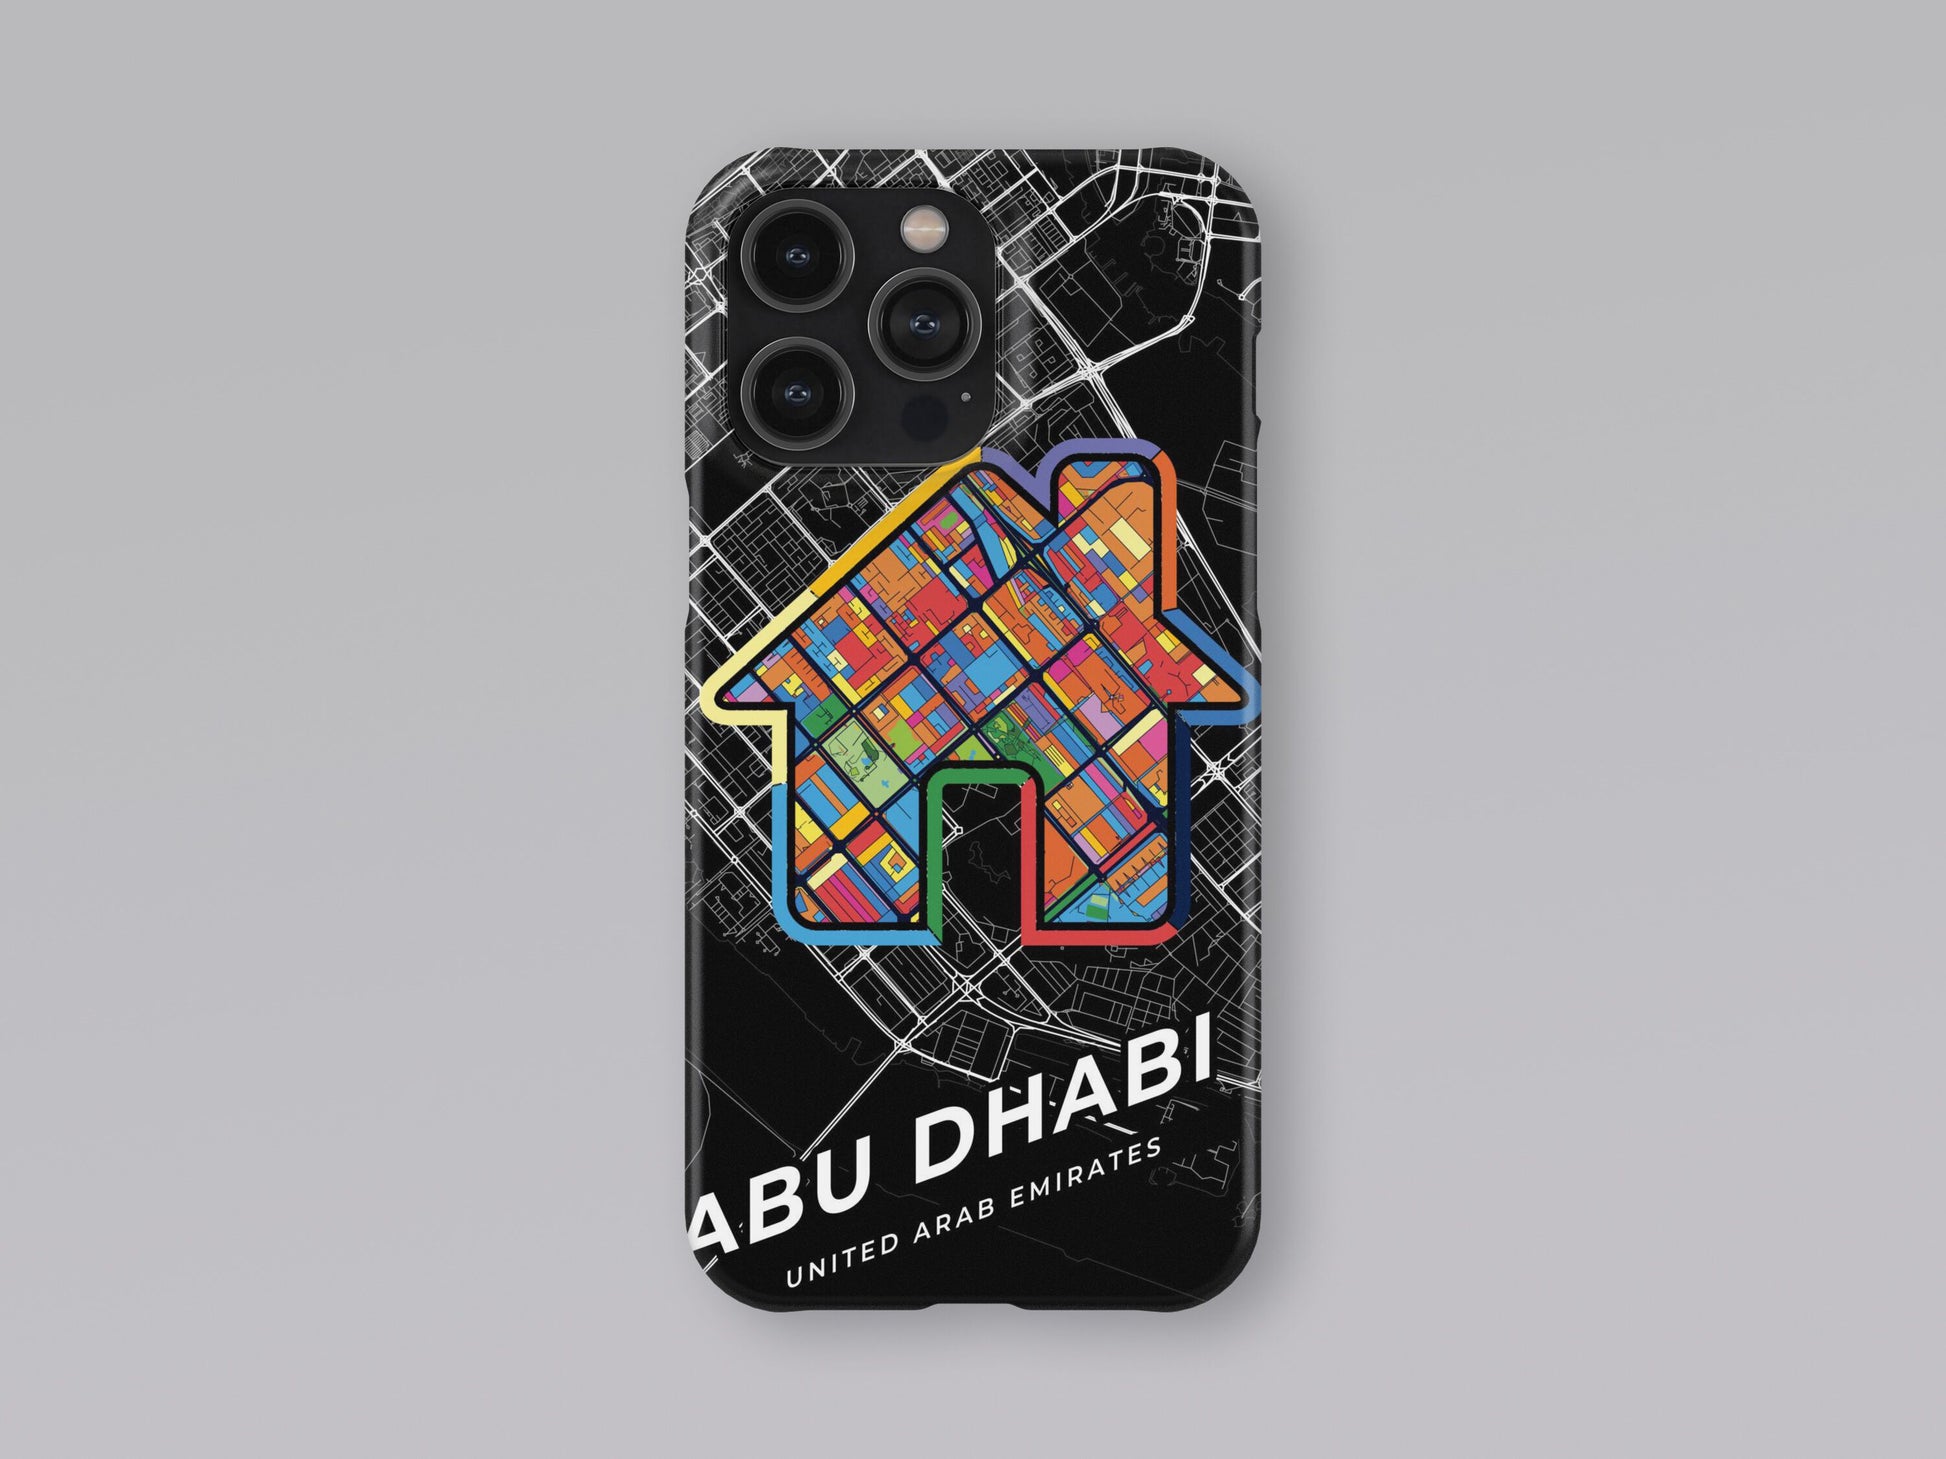 Abu Dhabi United Arab Emirates slim phone case with colorful icon. Birthday, wedding or housewarming gift. Couple match cases. 3